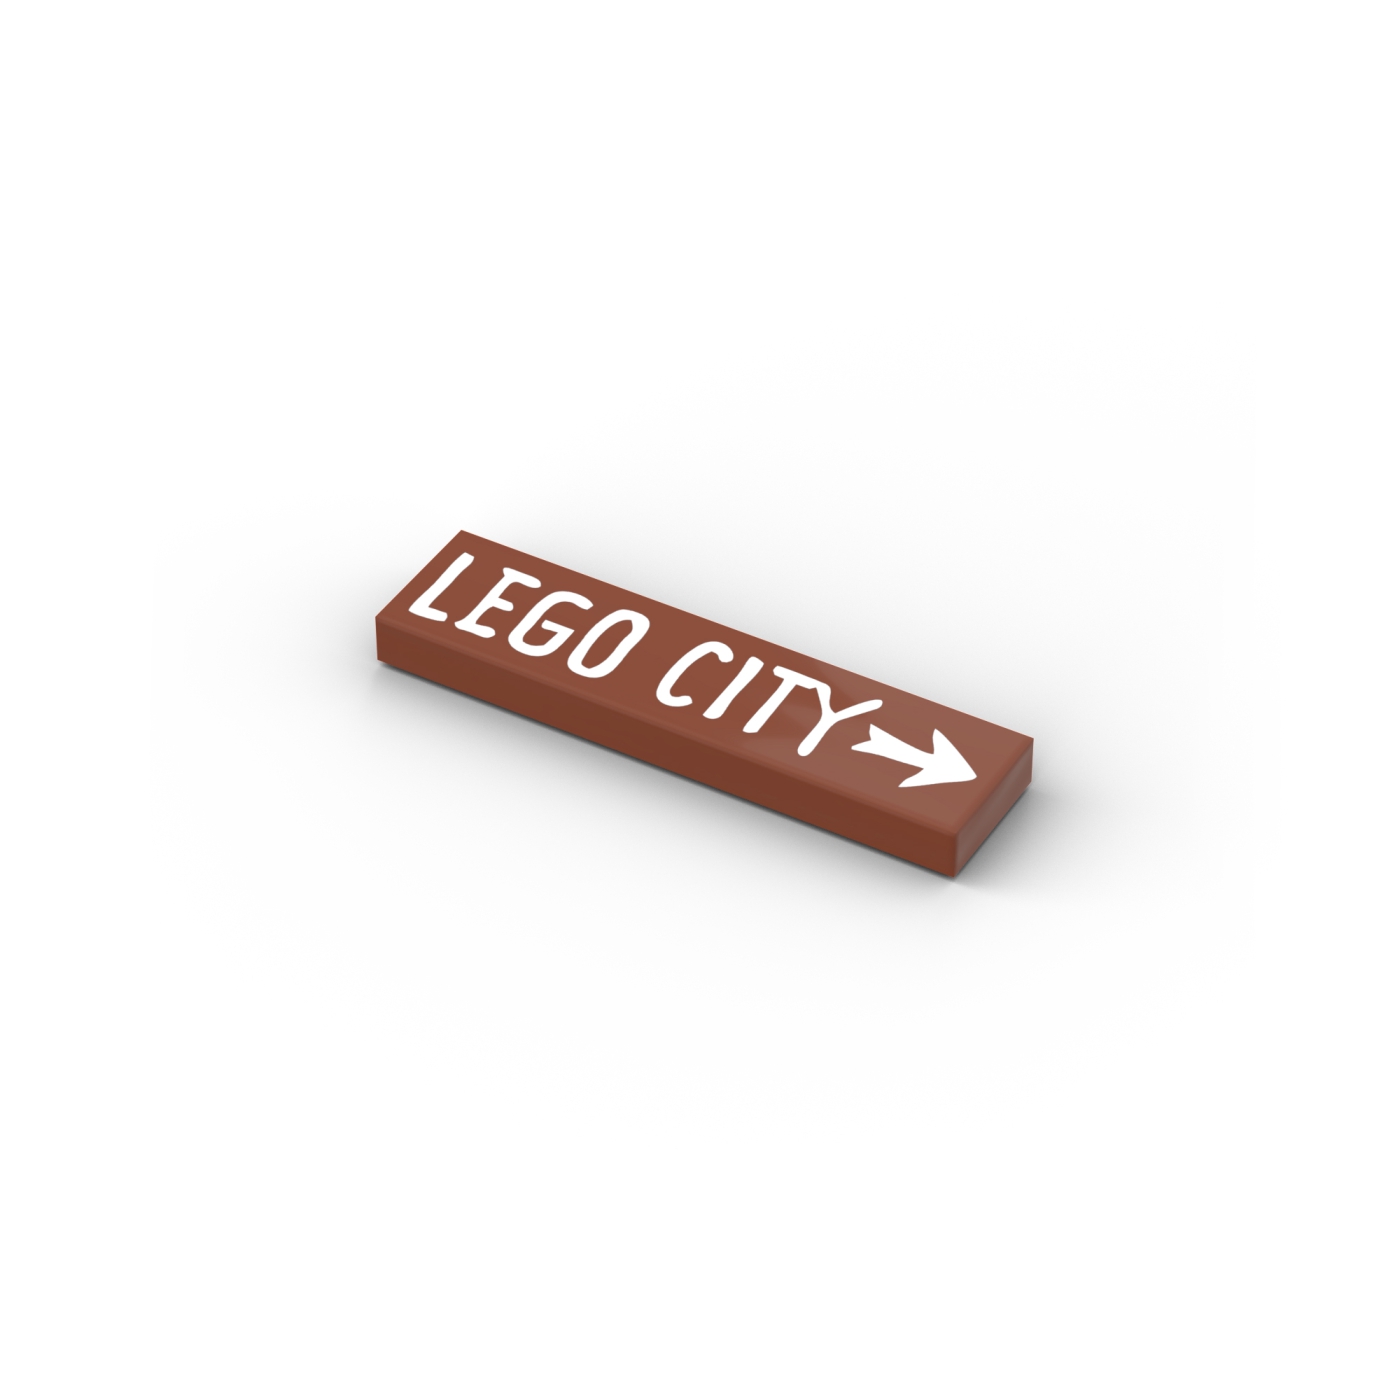 LEGO CITY Signpost